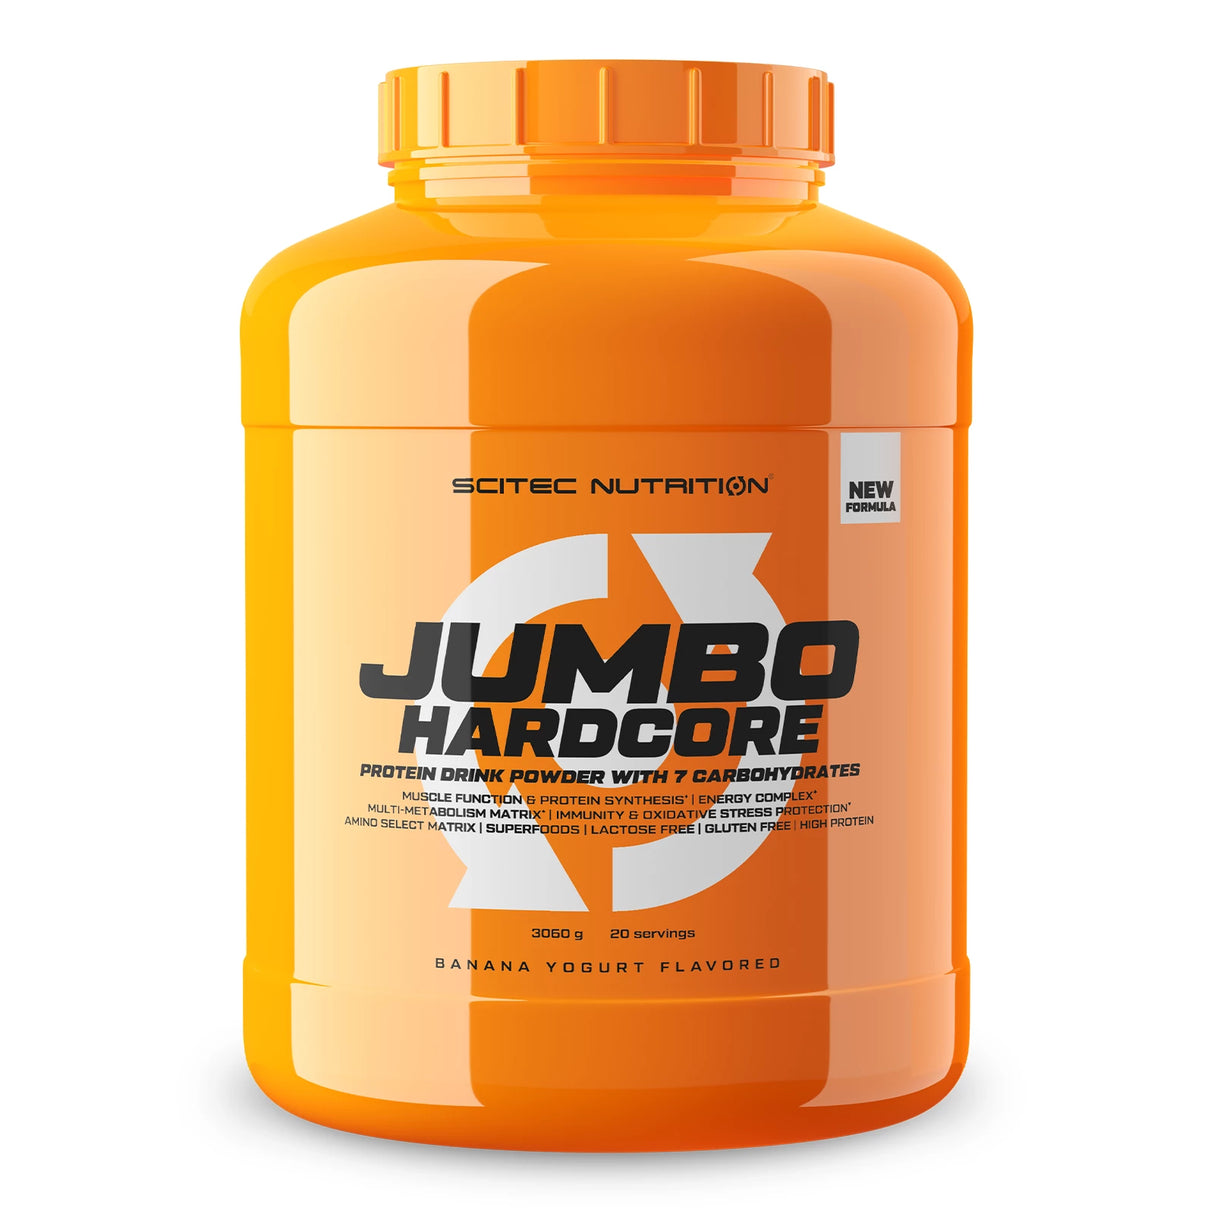 JUMBO HARDCORE - 3060G Scitec Nutrition